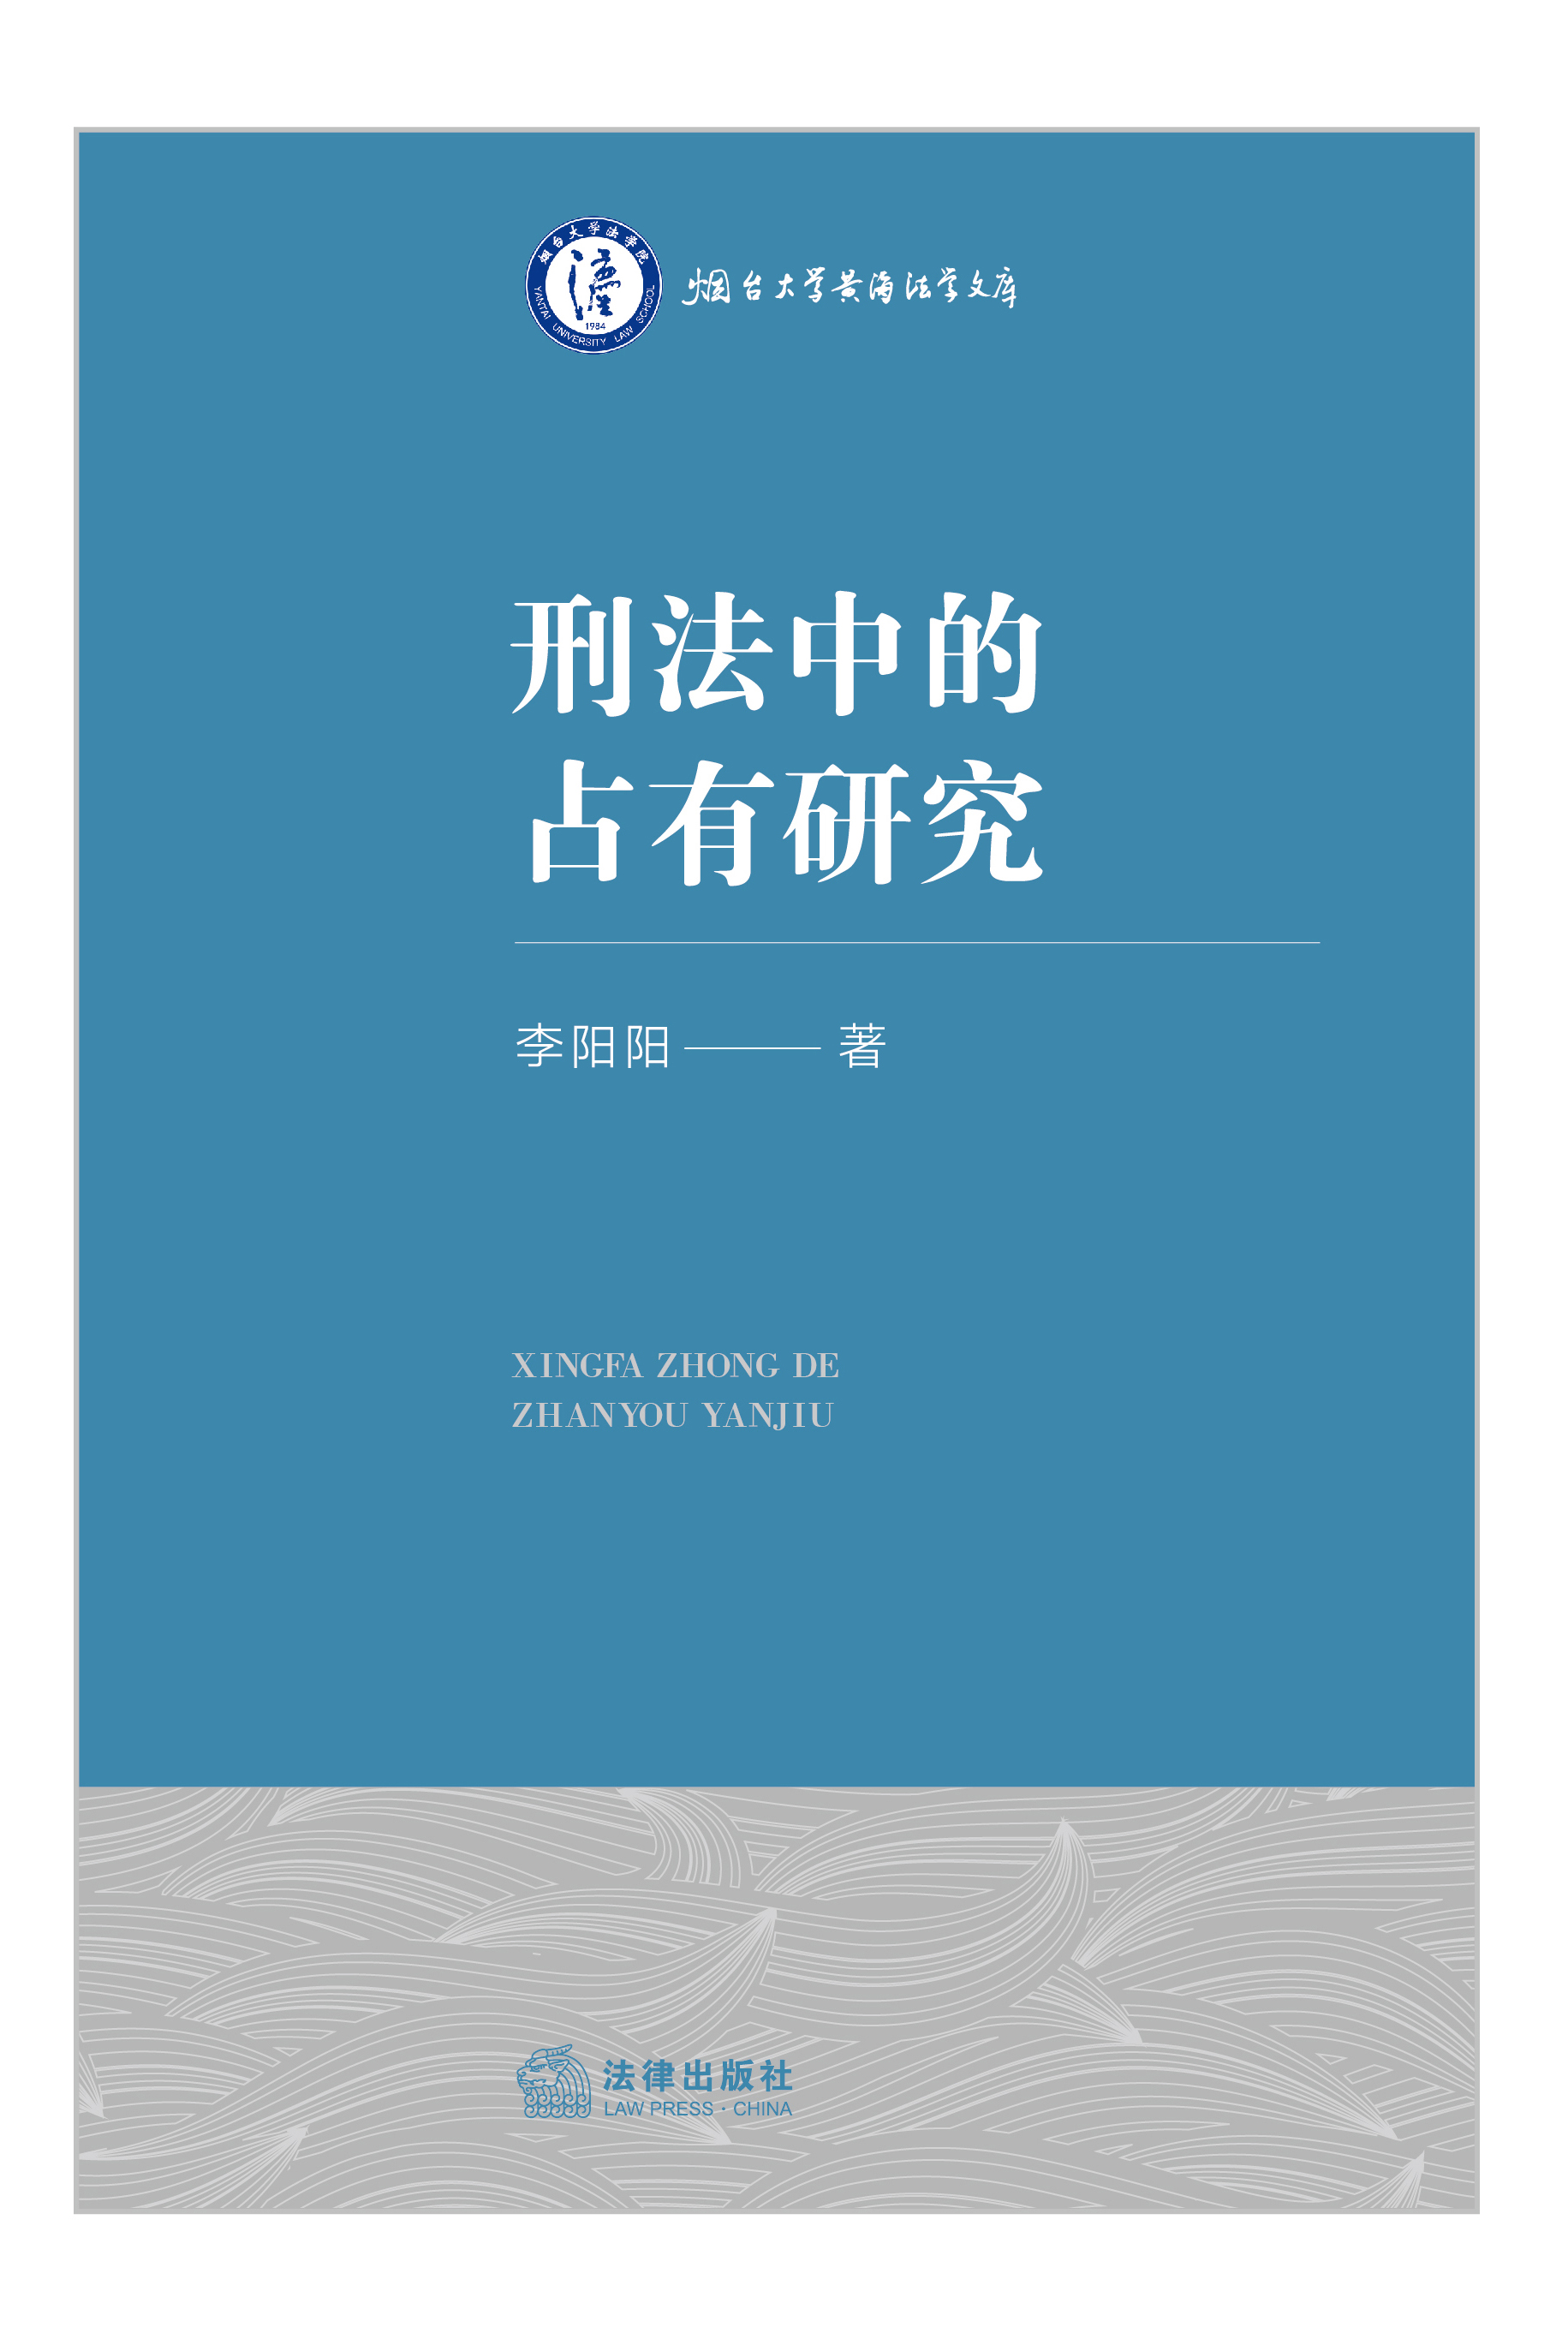 WEB限定カラー 中华人民共和国现行会计法律法规汇编 2014年